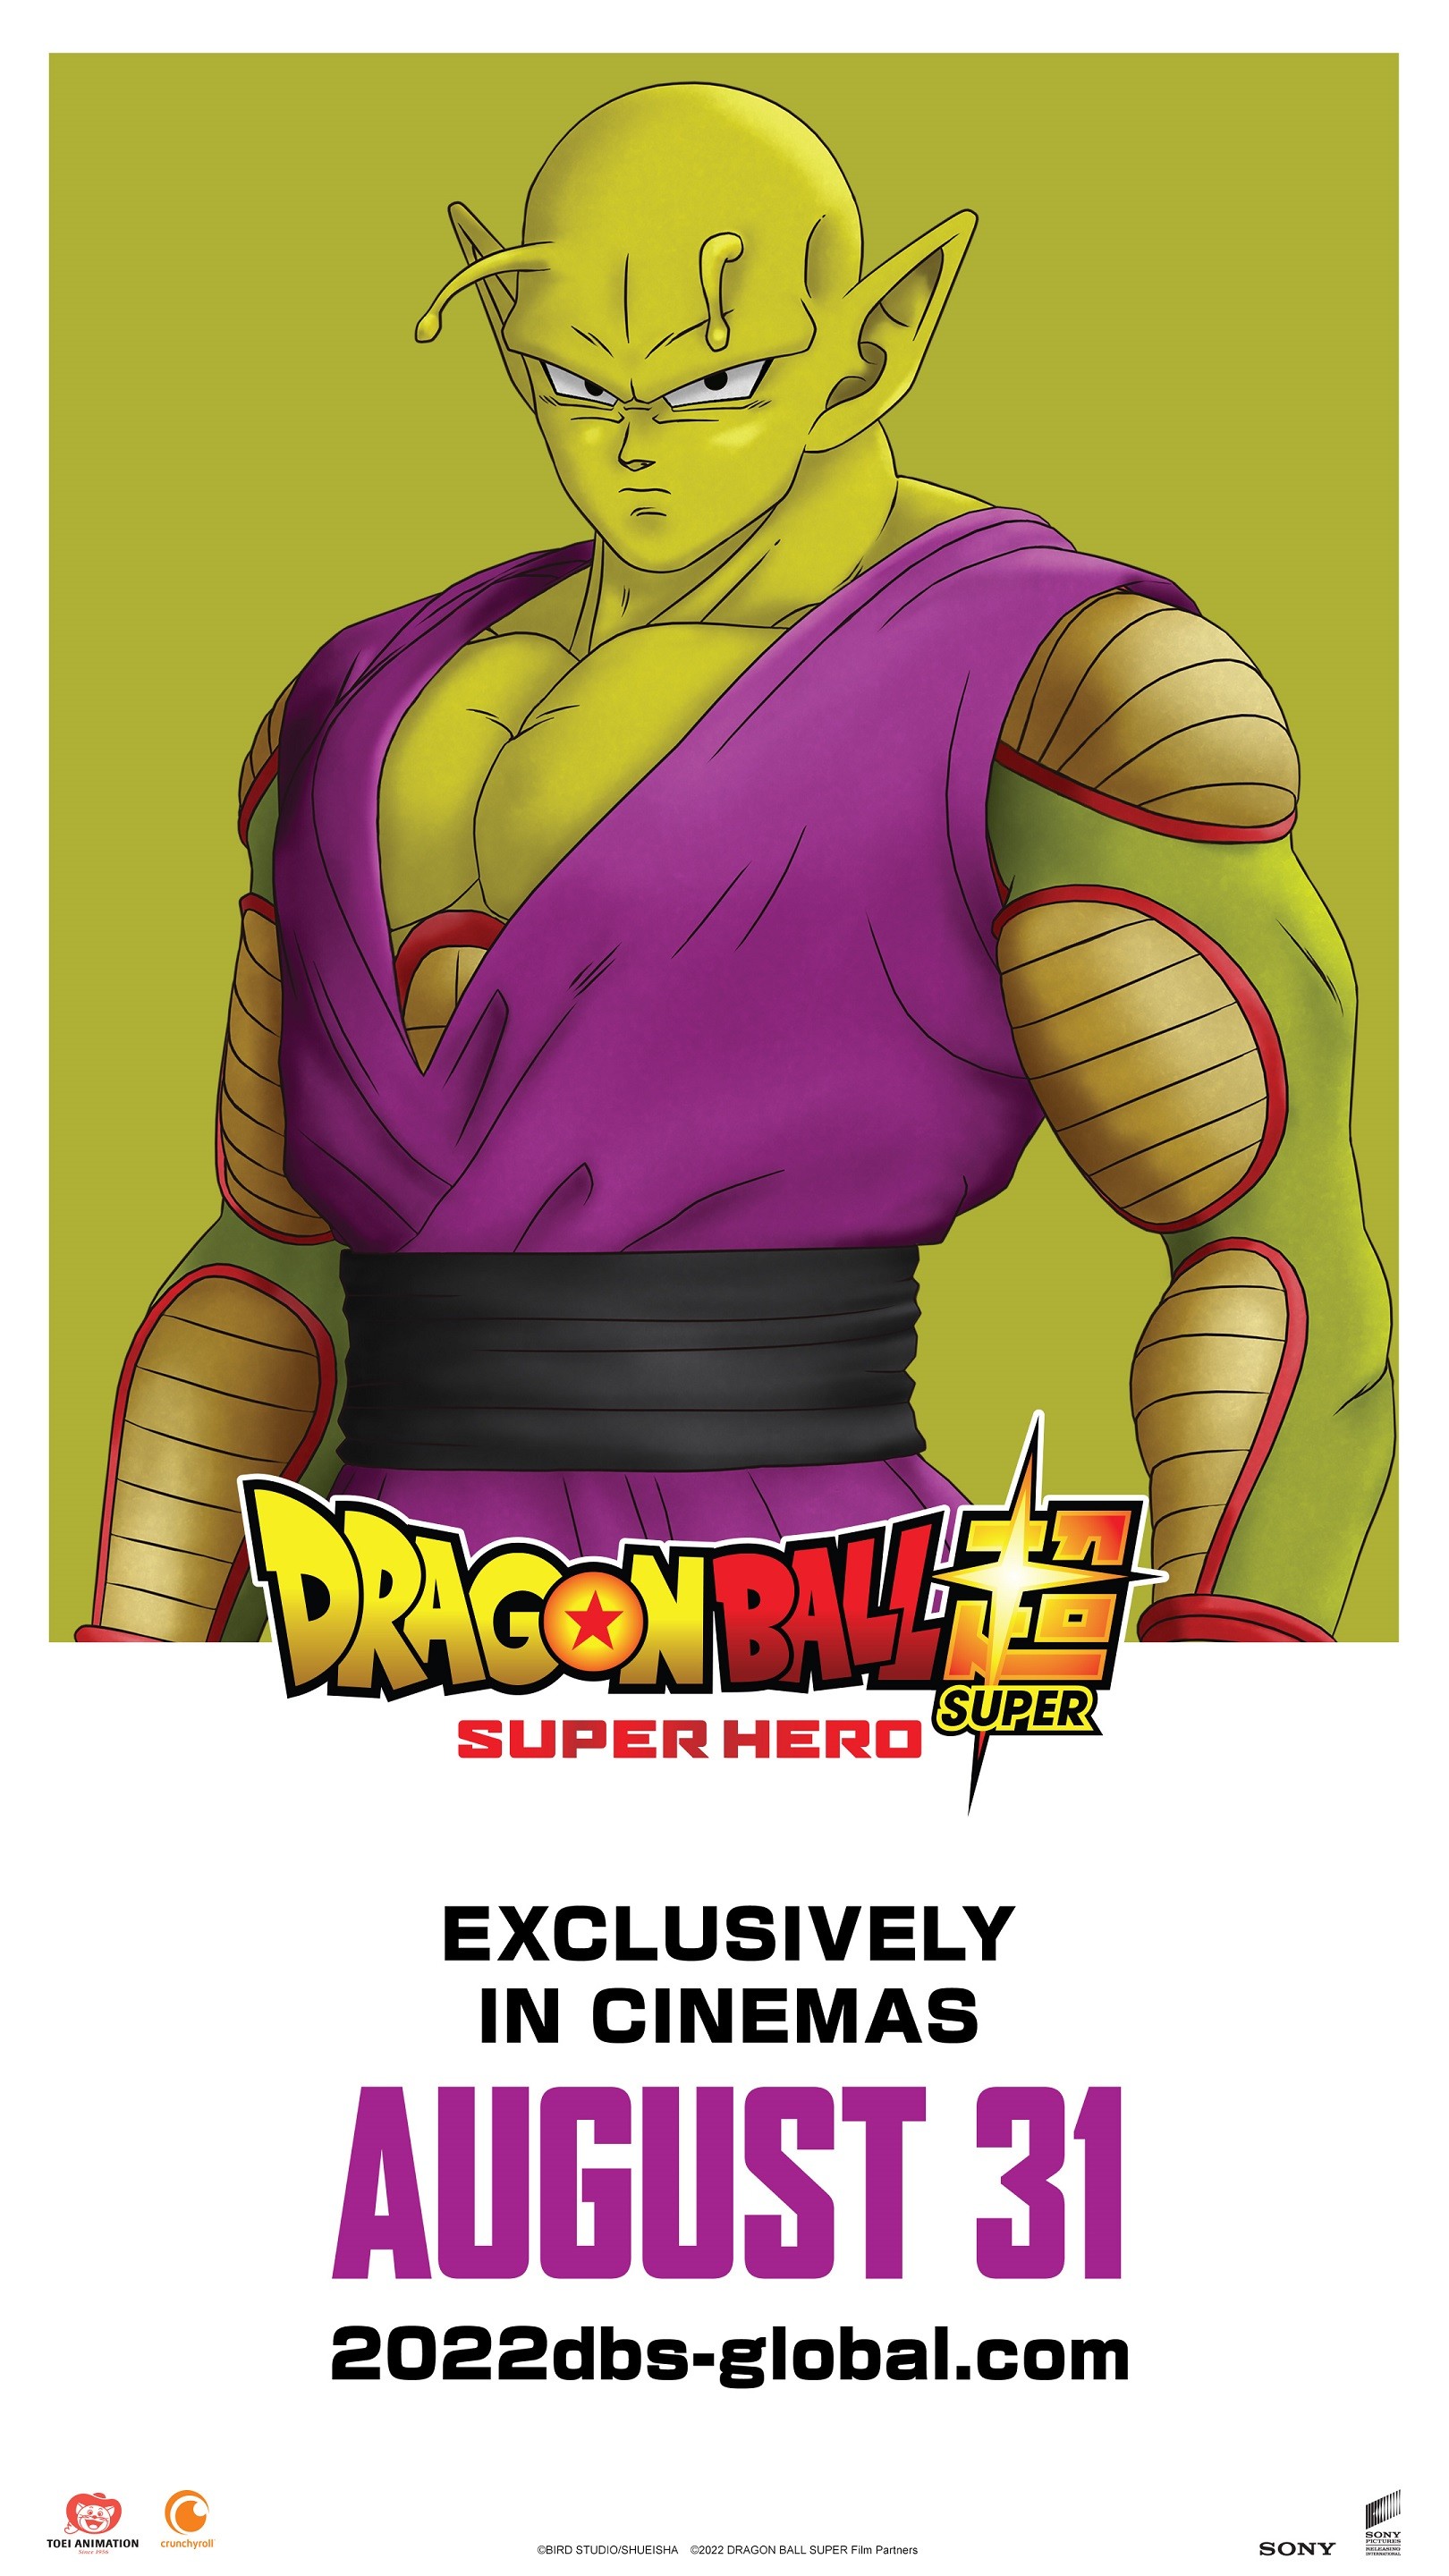 Dragon Ball Super: Super Hero Character Posters Show Main Cast